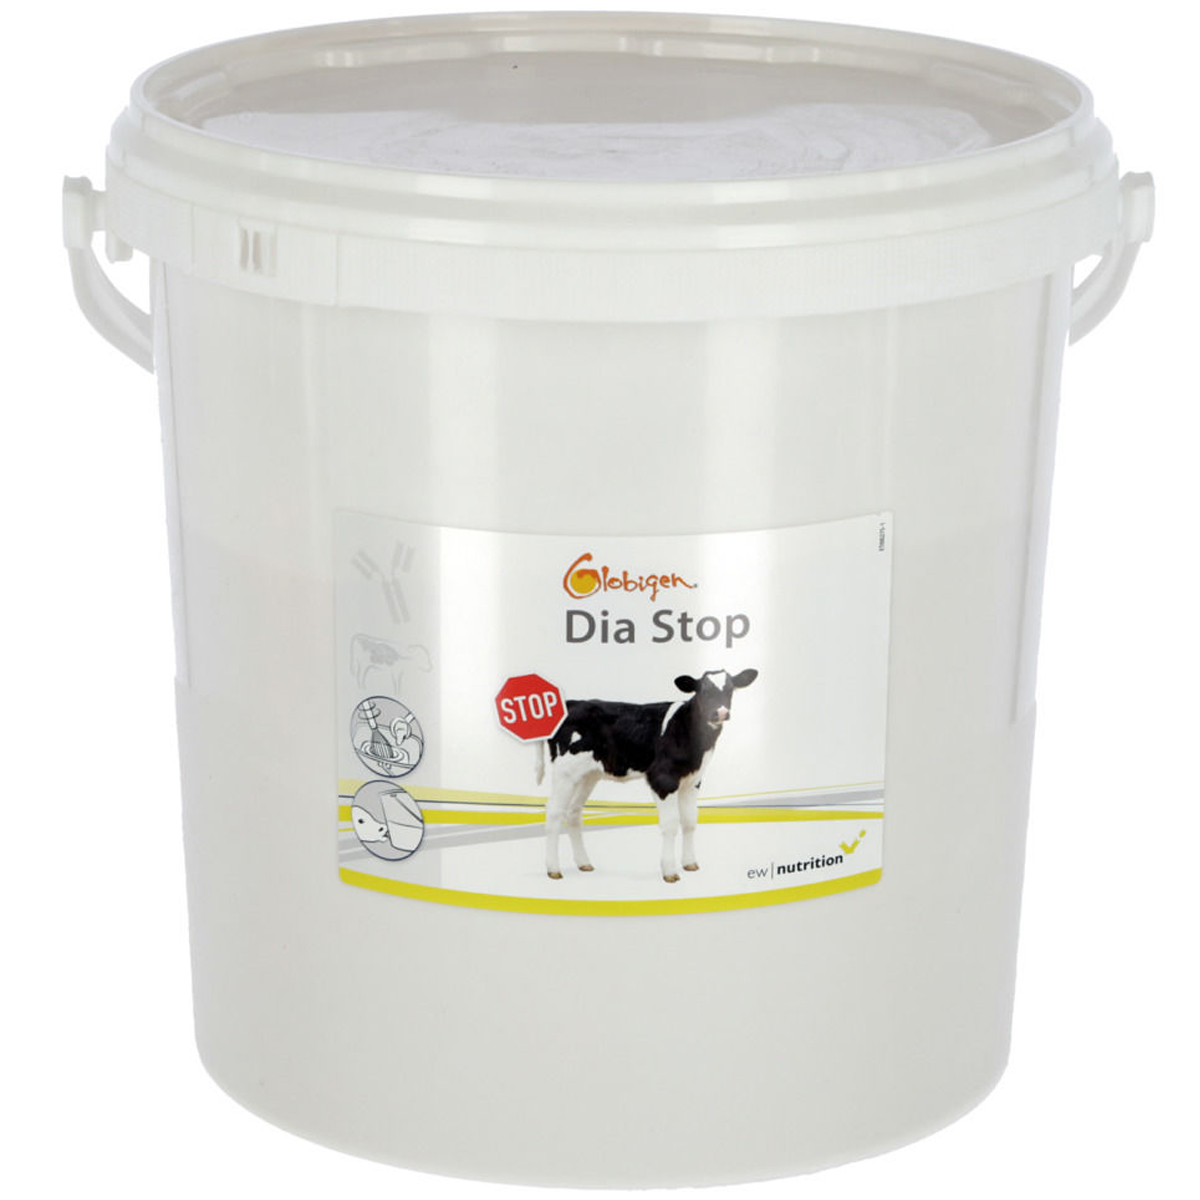 Globigen Dia Stop integratore dietetico per vitelli 2 kg